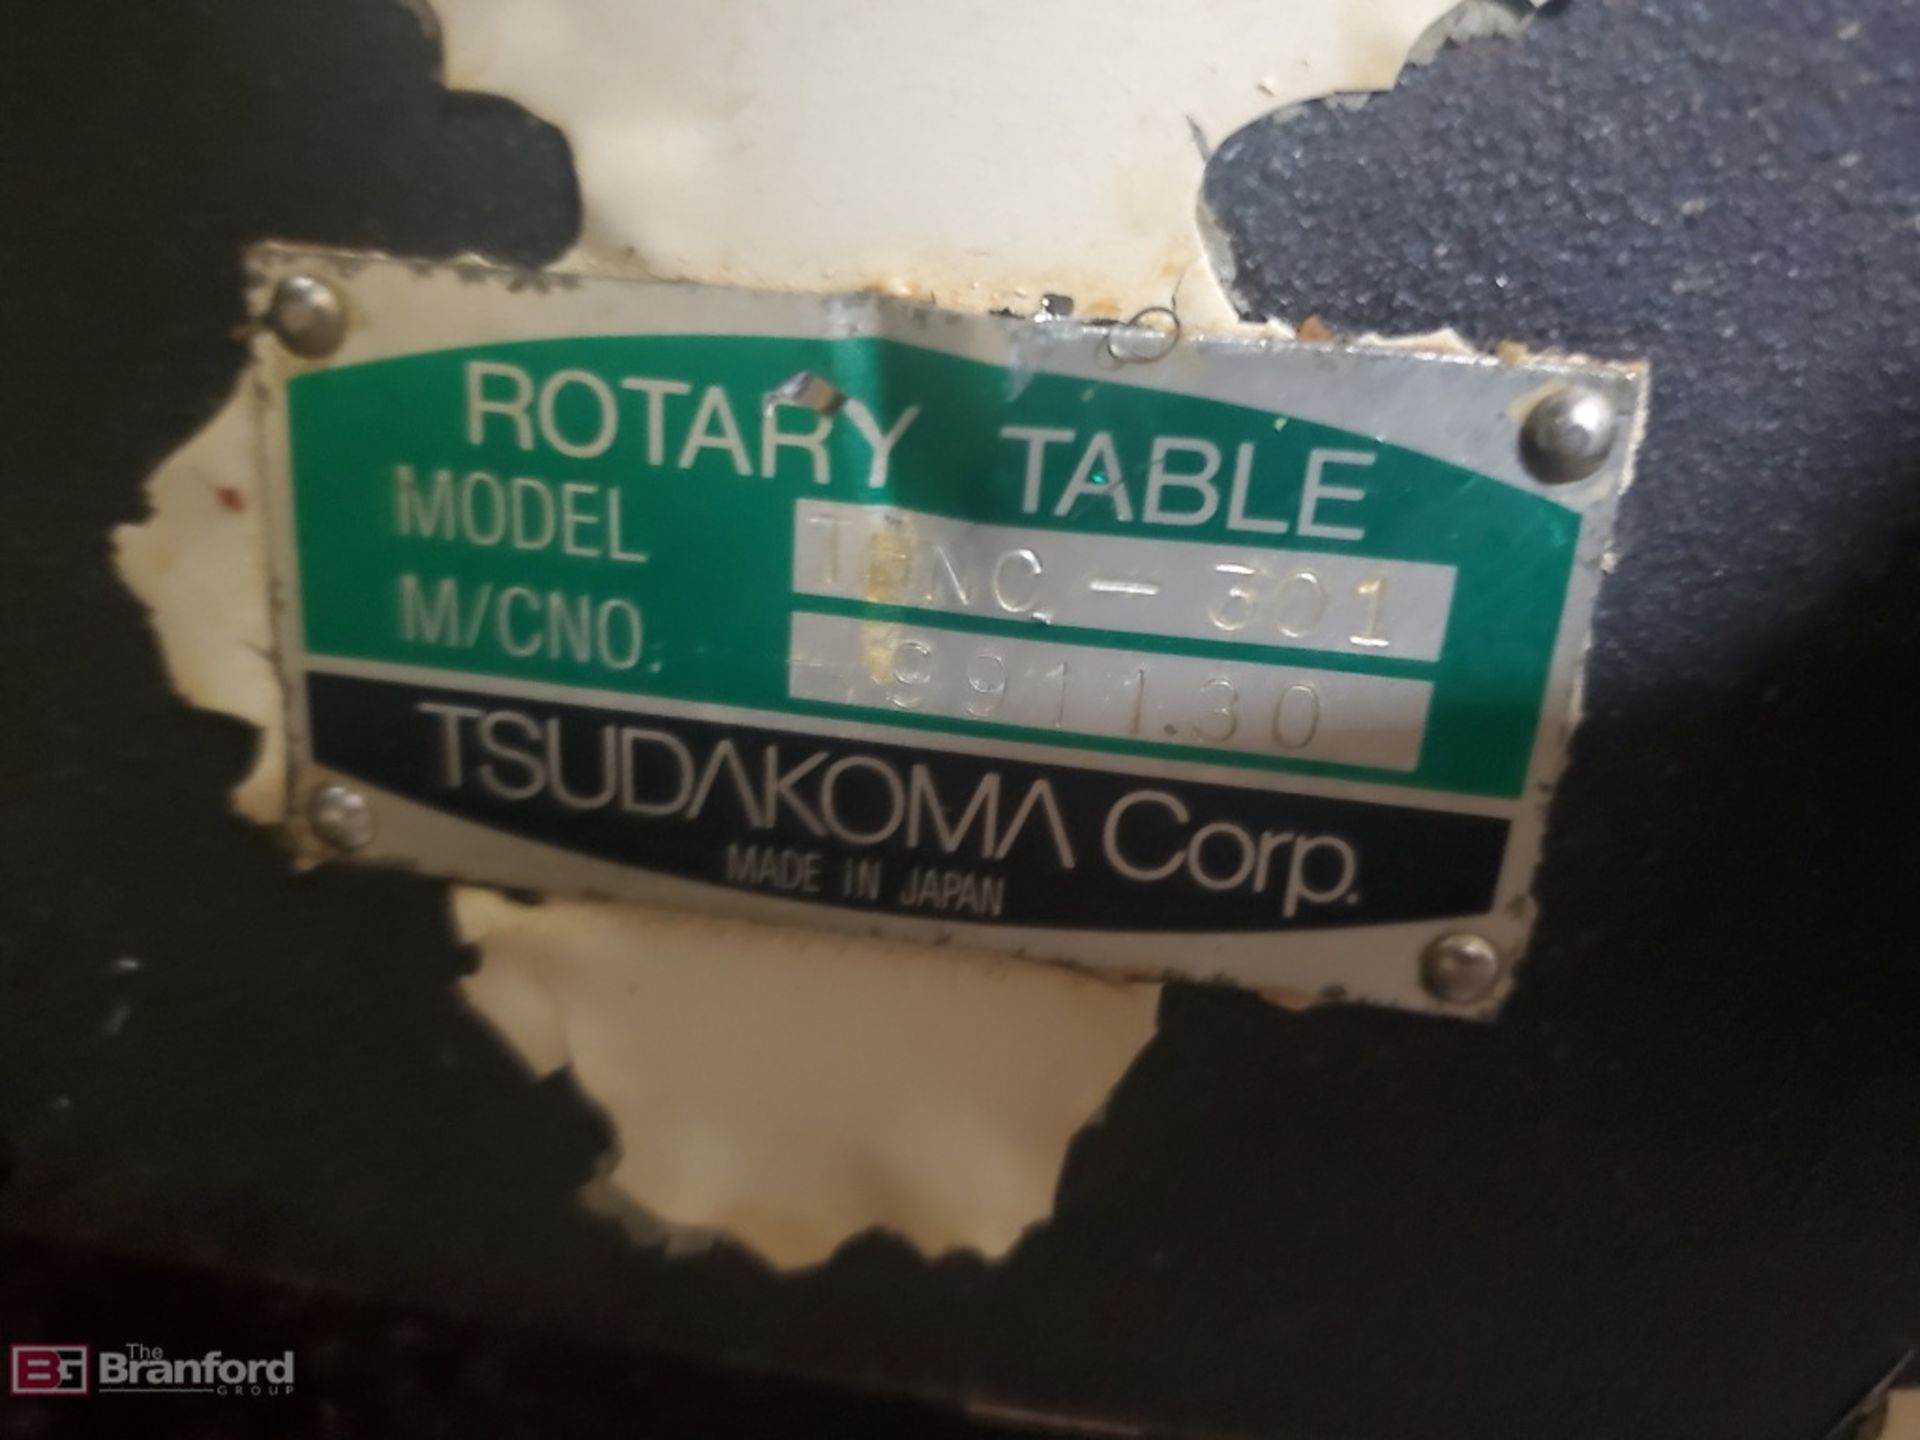 Tsudakoma Model TDNC-301, 12" (301mm) Rotary Table - Image 3 of 3